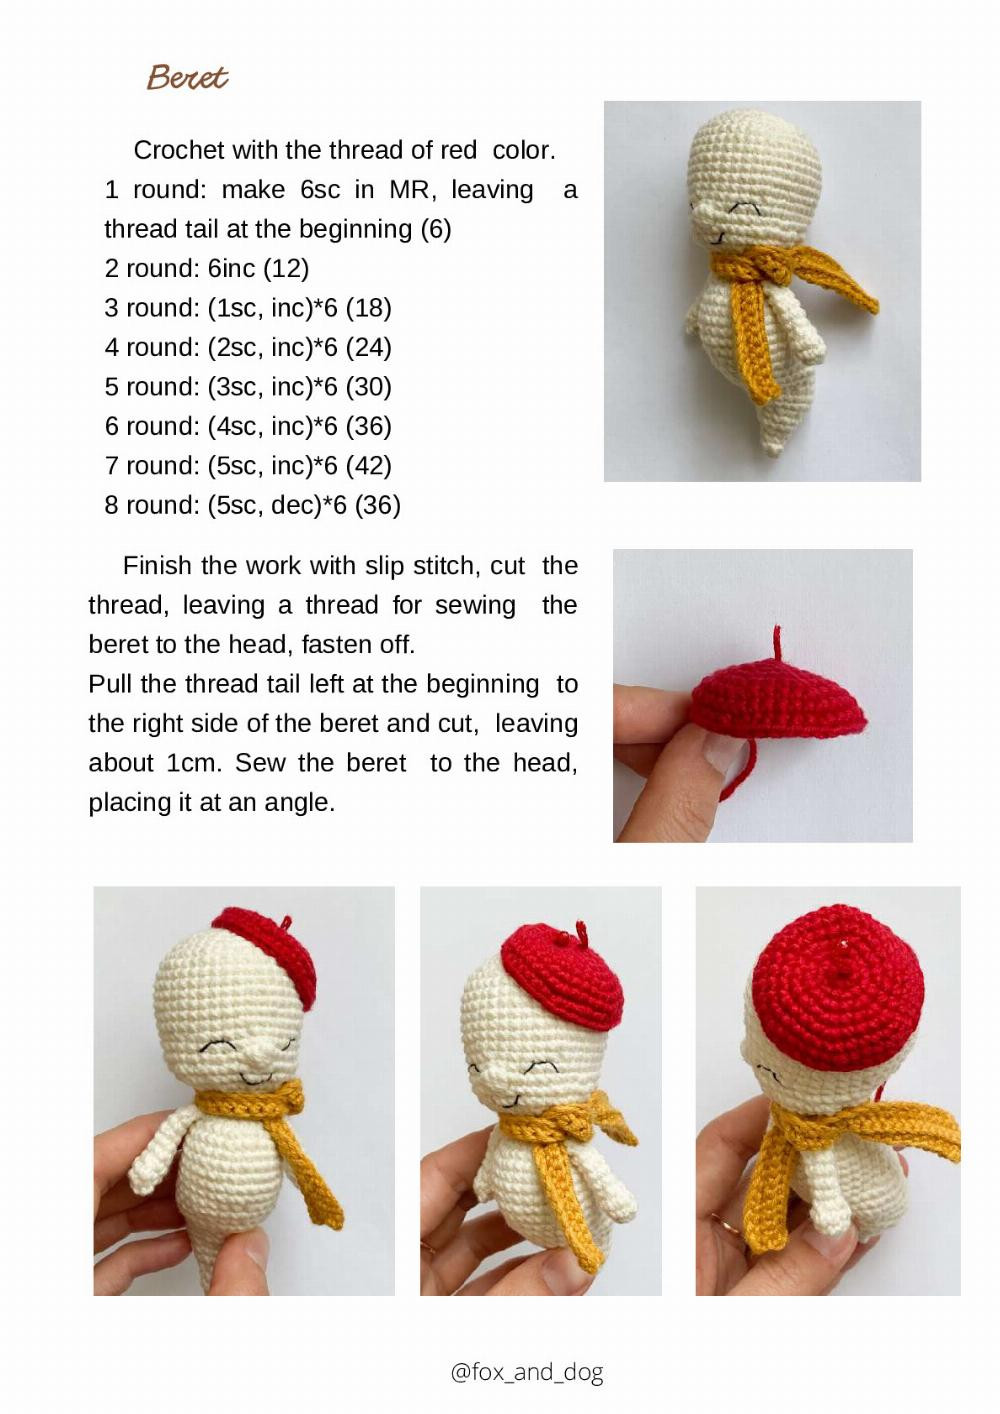 Ginny, the wizard crochet toy pattern